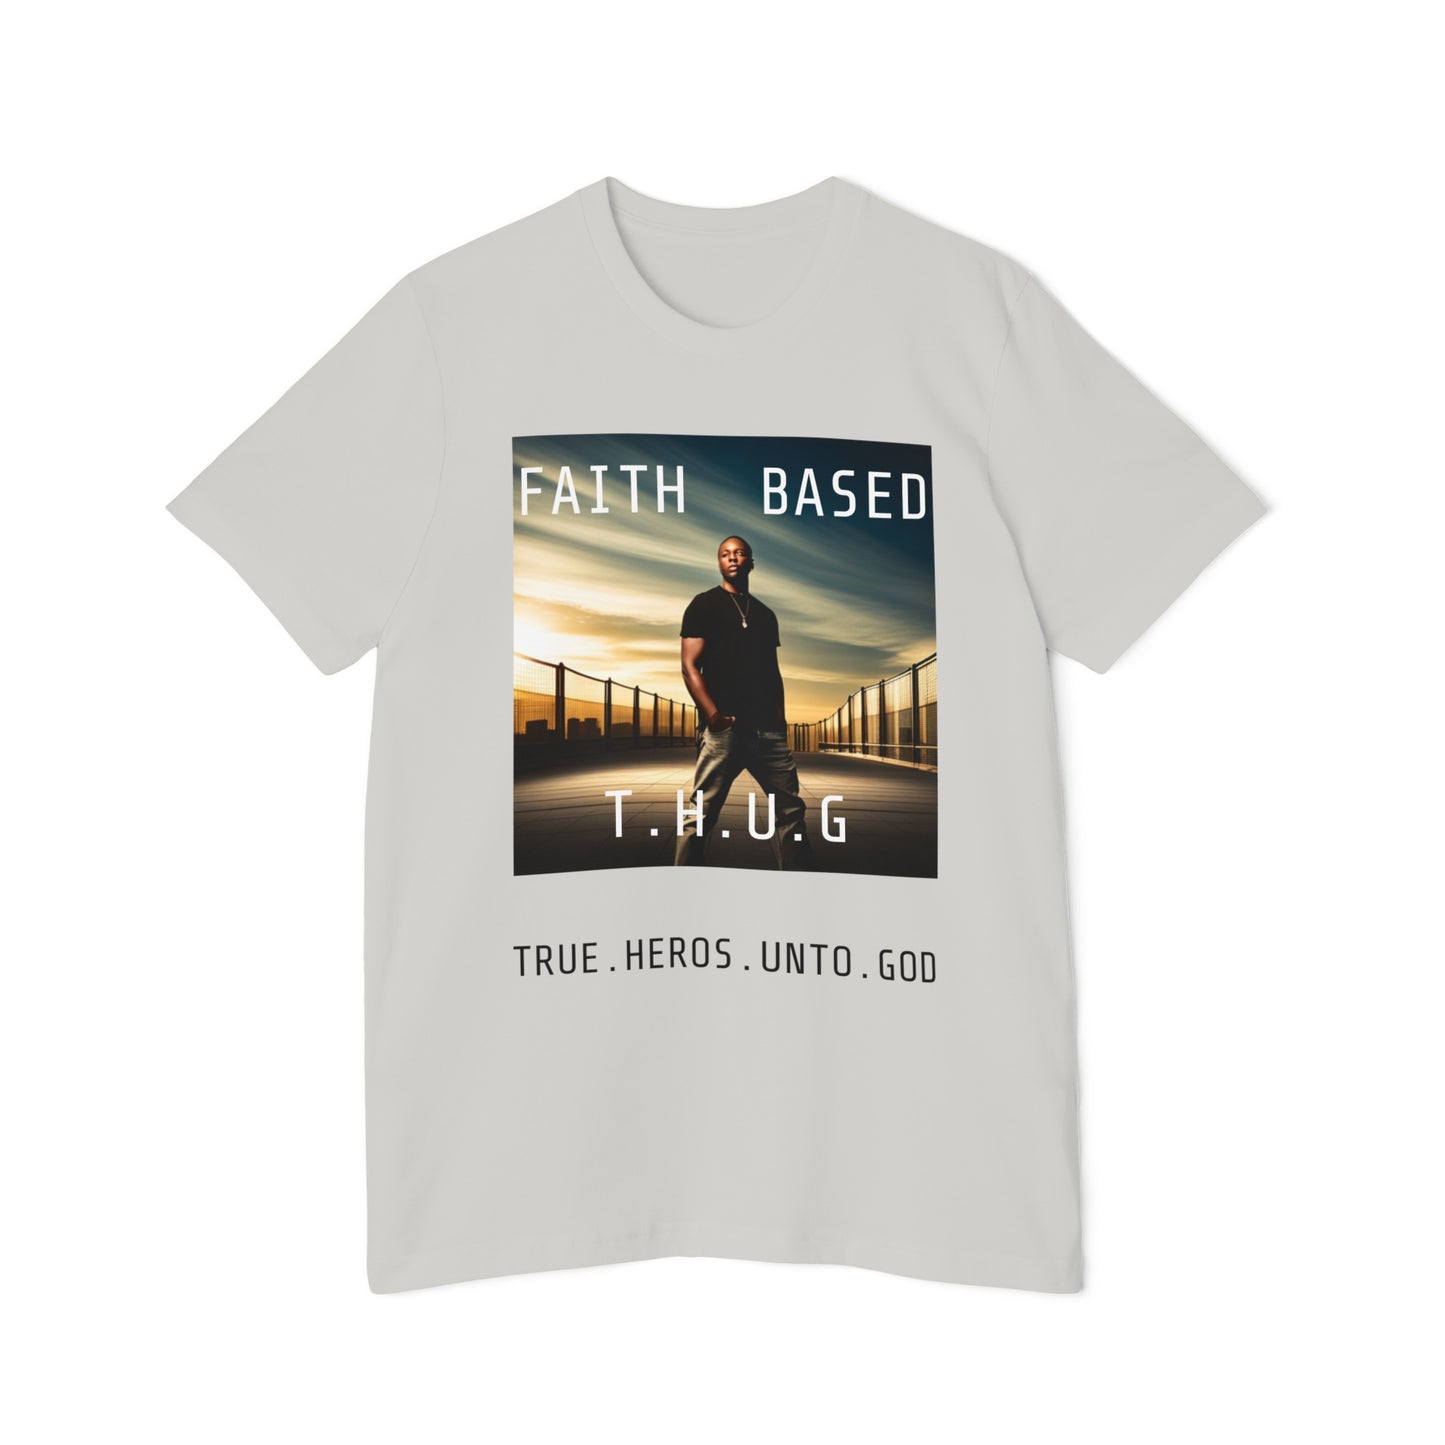 FAITH BASED T.H.U.G Short-Sleeve Jersey T-Shirt